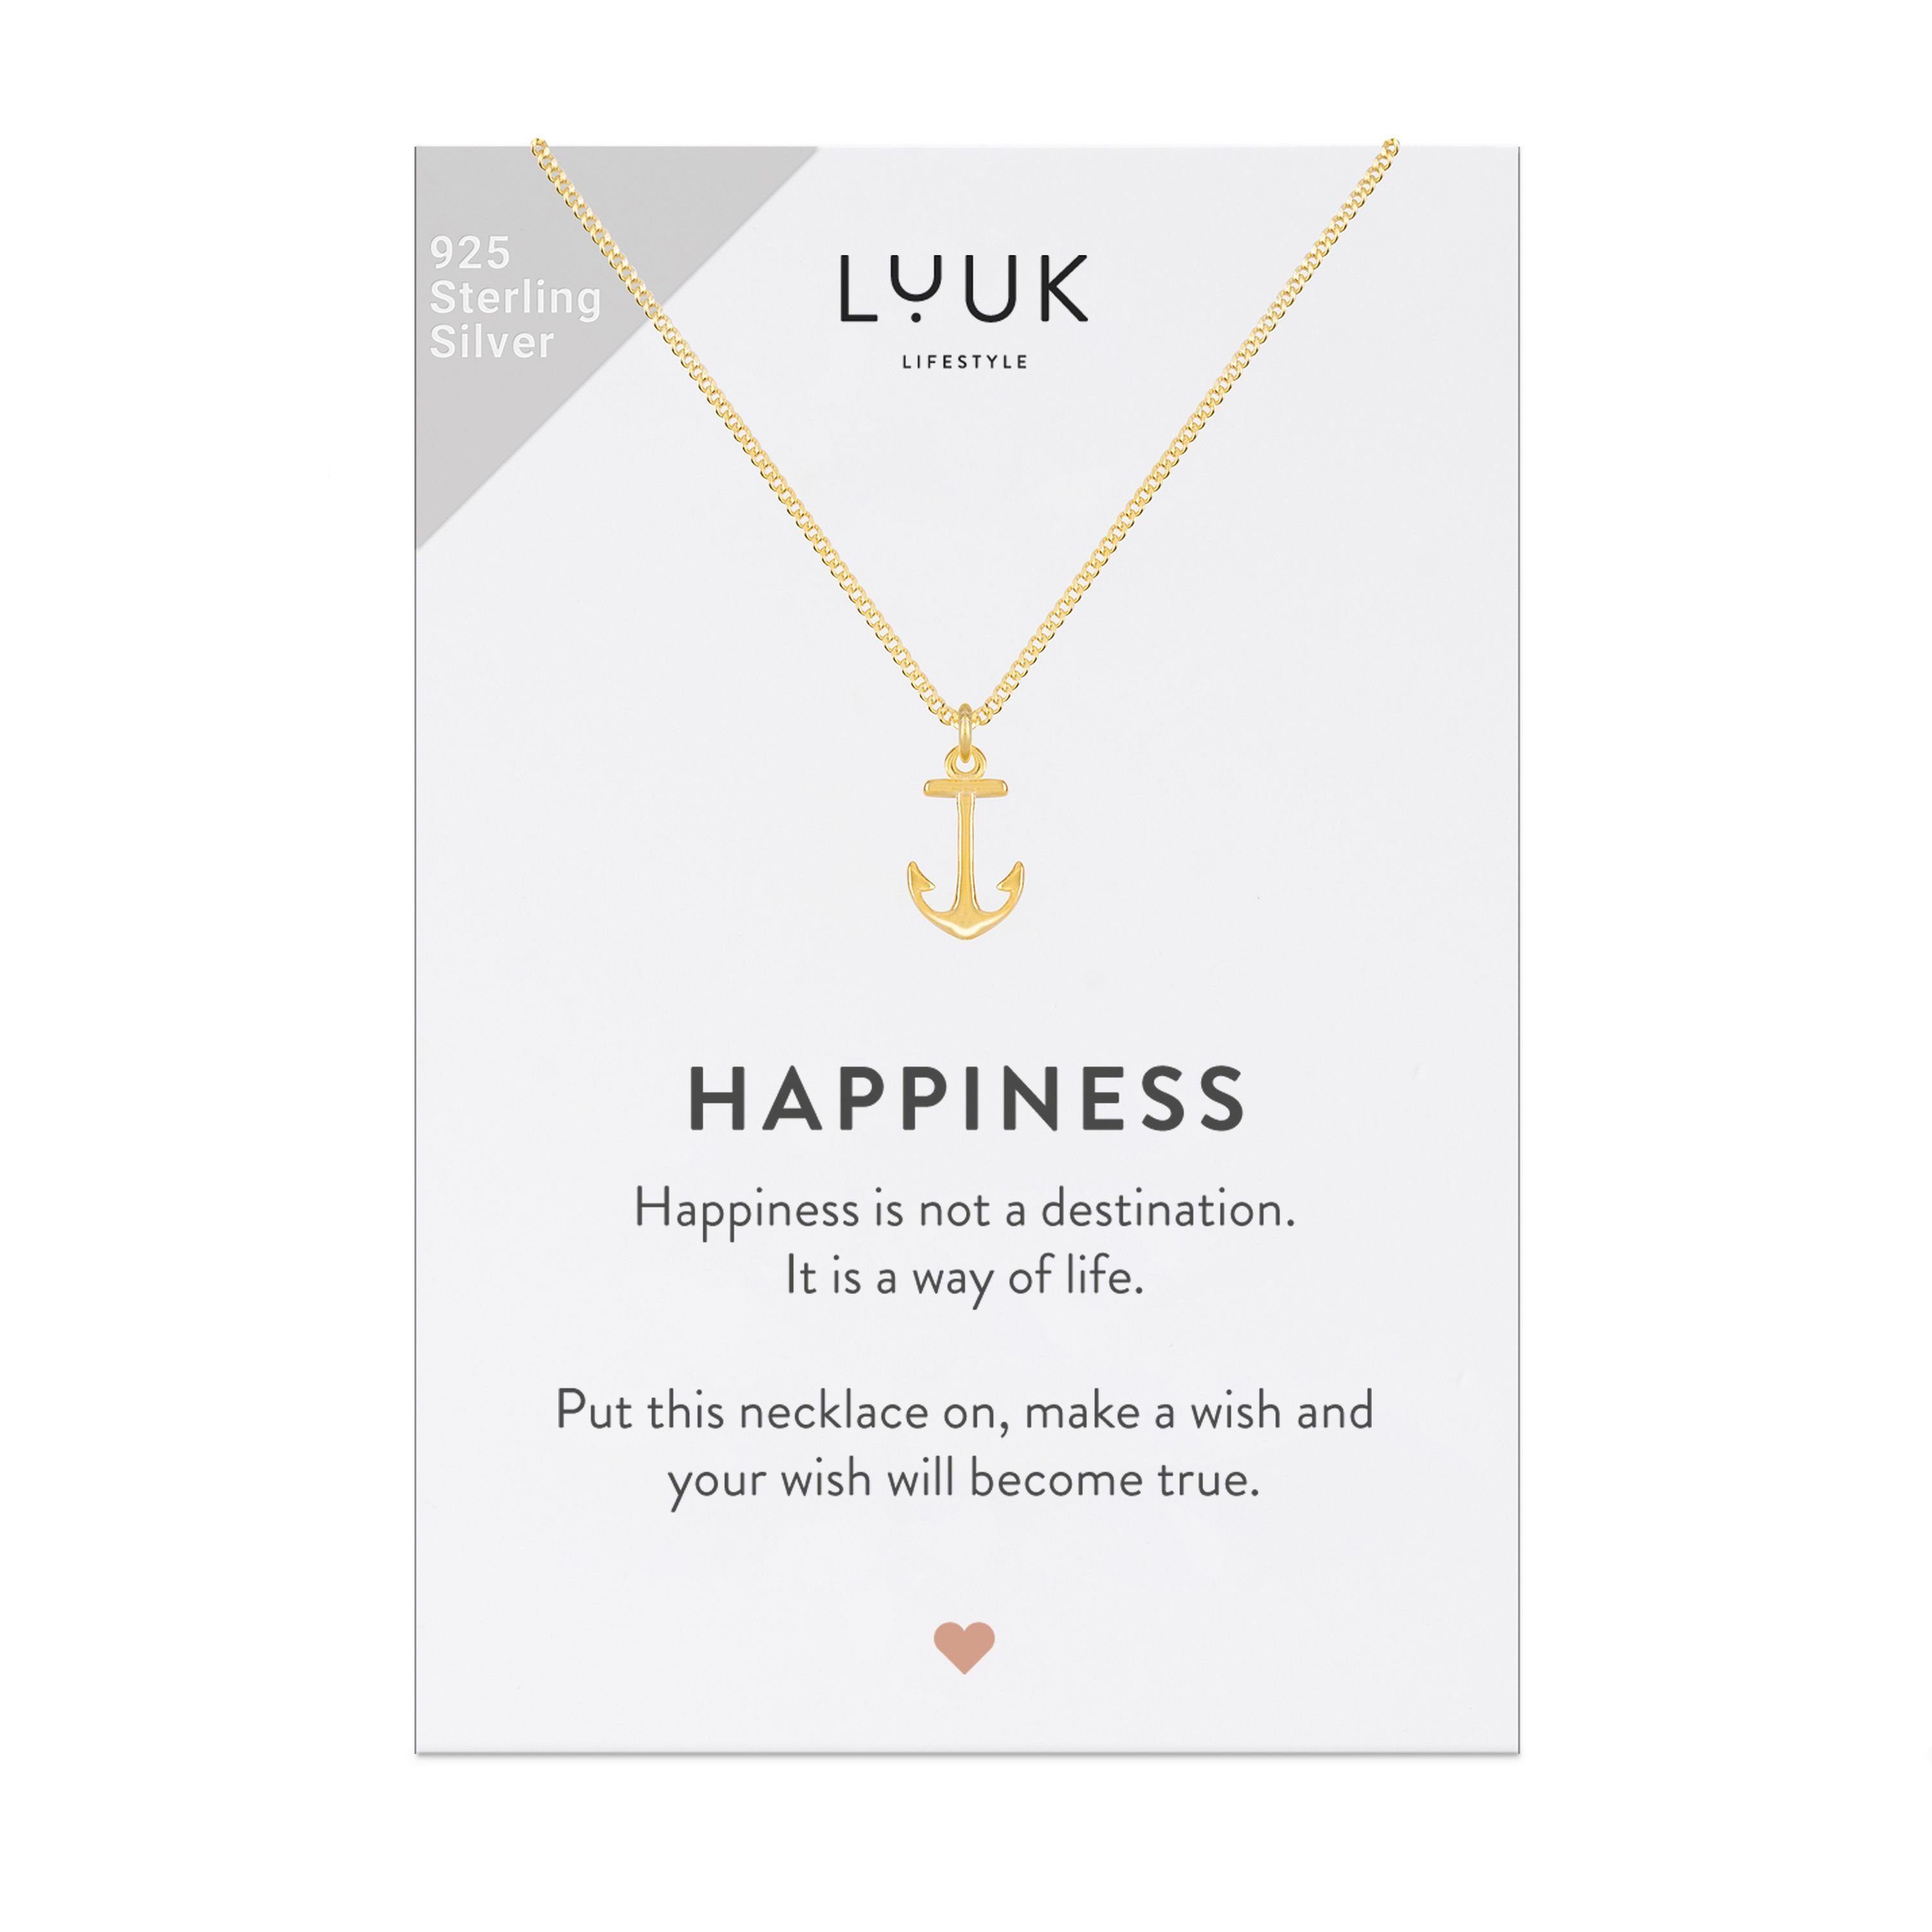 Anker, Spruchkarte LUUK Happiness LIFESTYLE Gold Silberkette inklusive